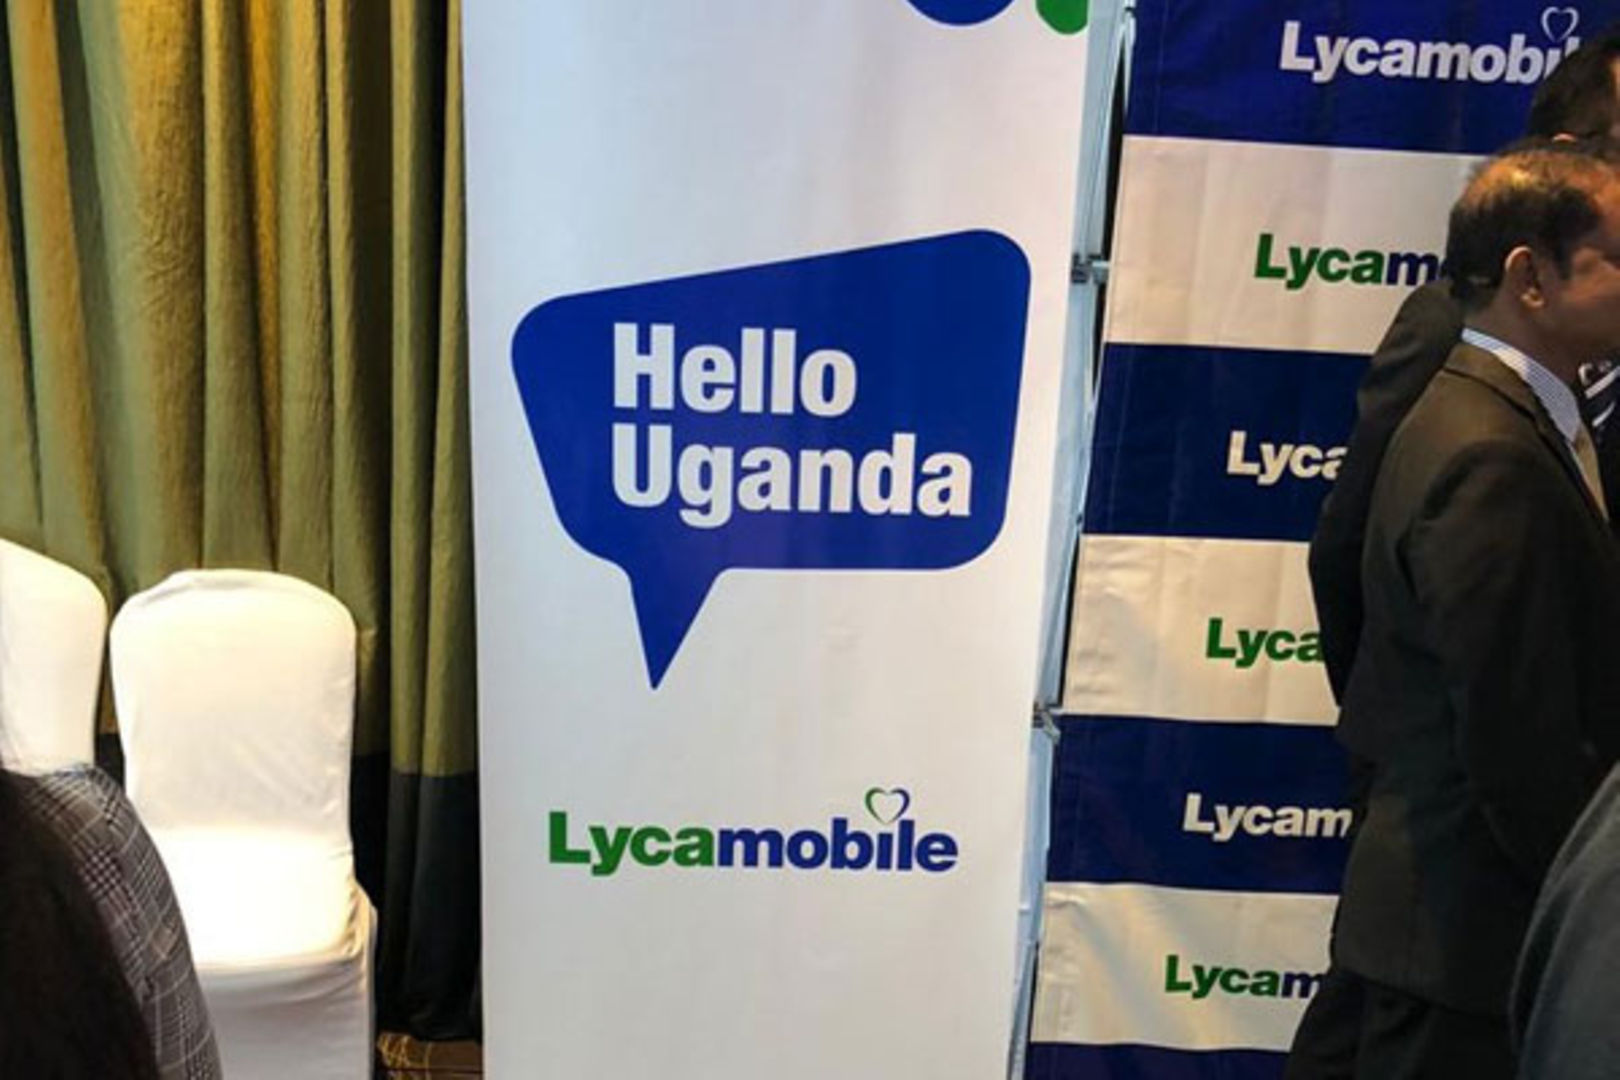 How to buy Lycamobile data in Uganda?, by Lifestyle Uganda